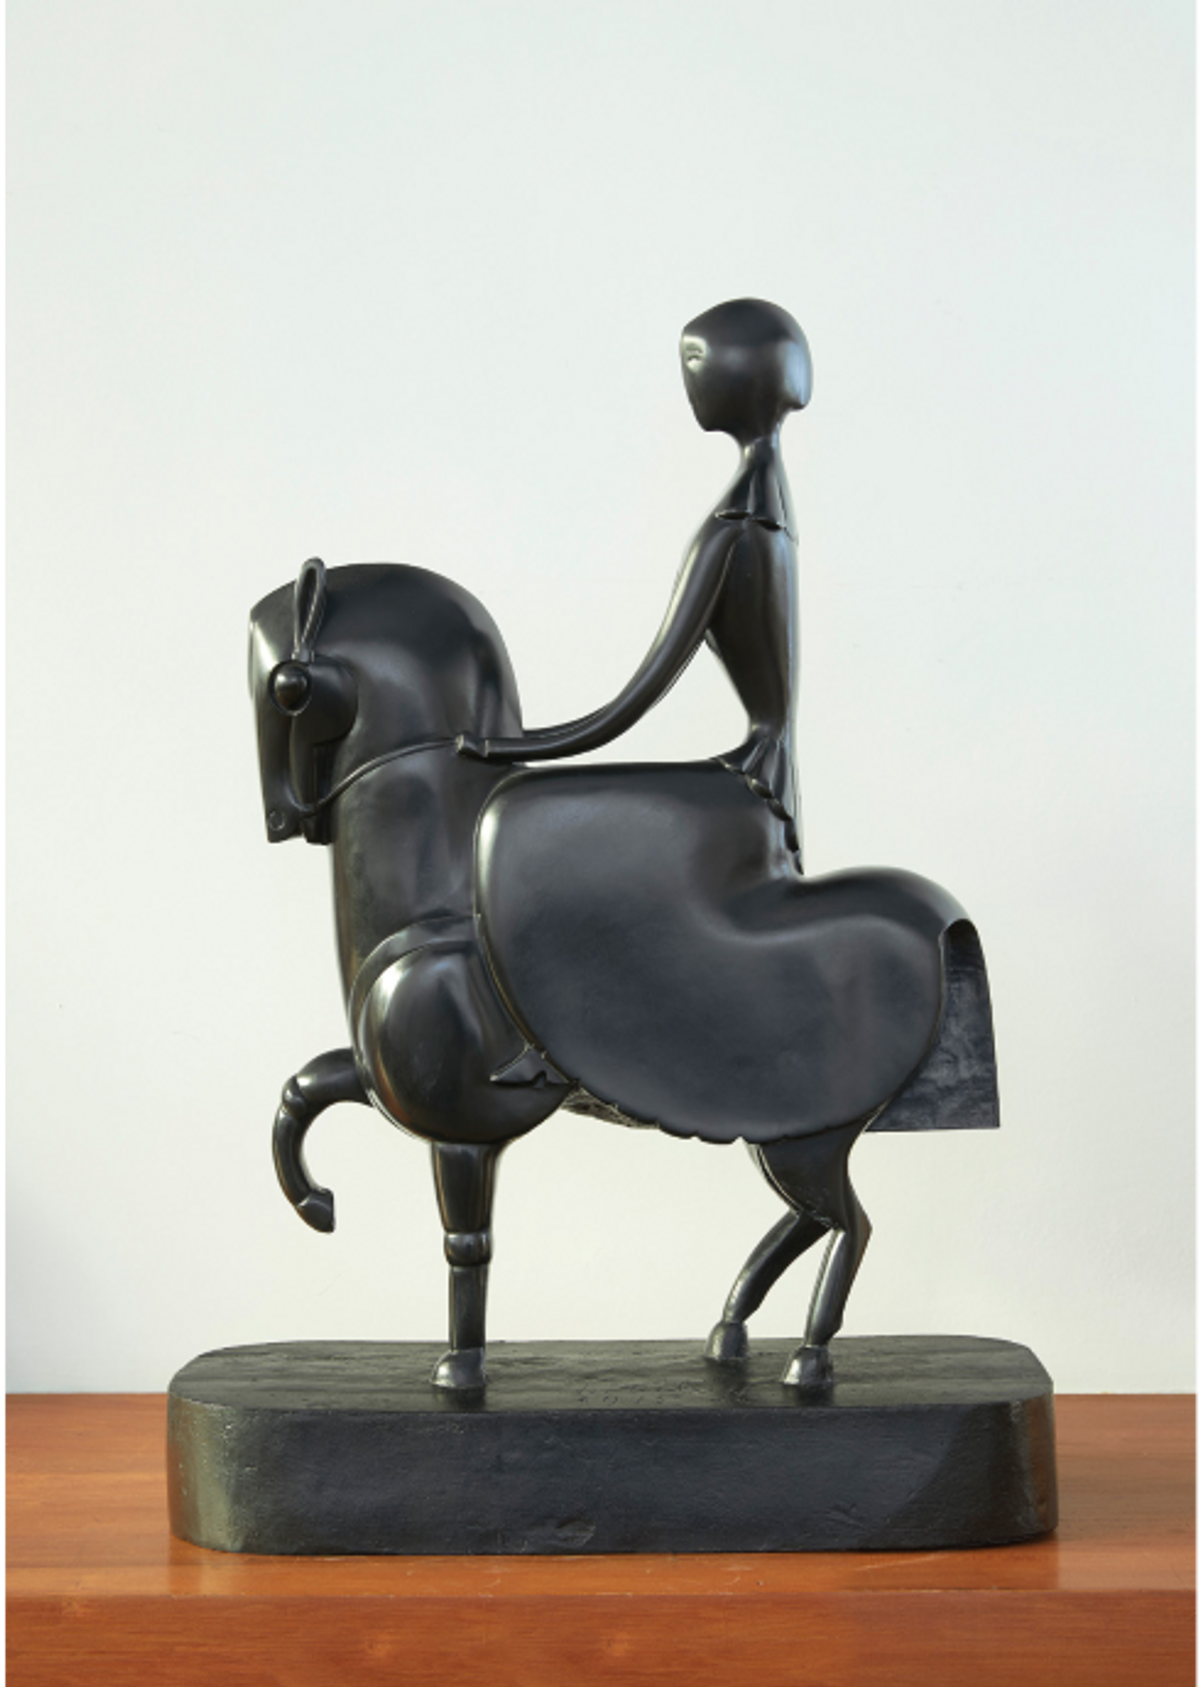 Chana Orloff, Amazone, 1915, bronze, ateliers-musée Chana Orloff, Paris. © Chana Orloff